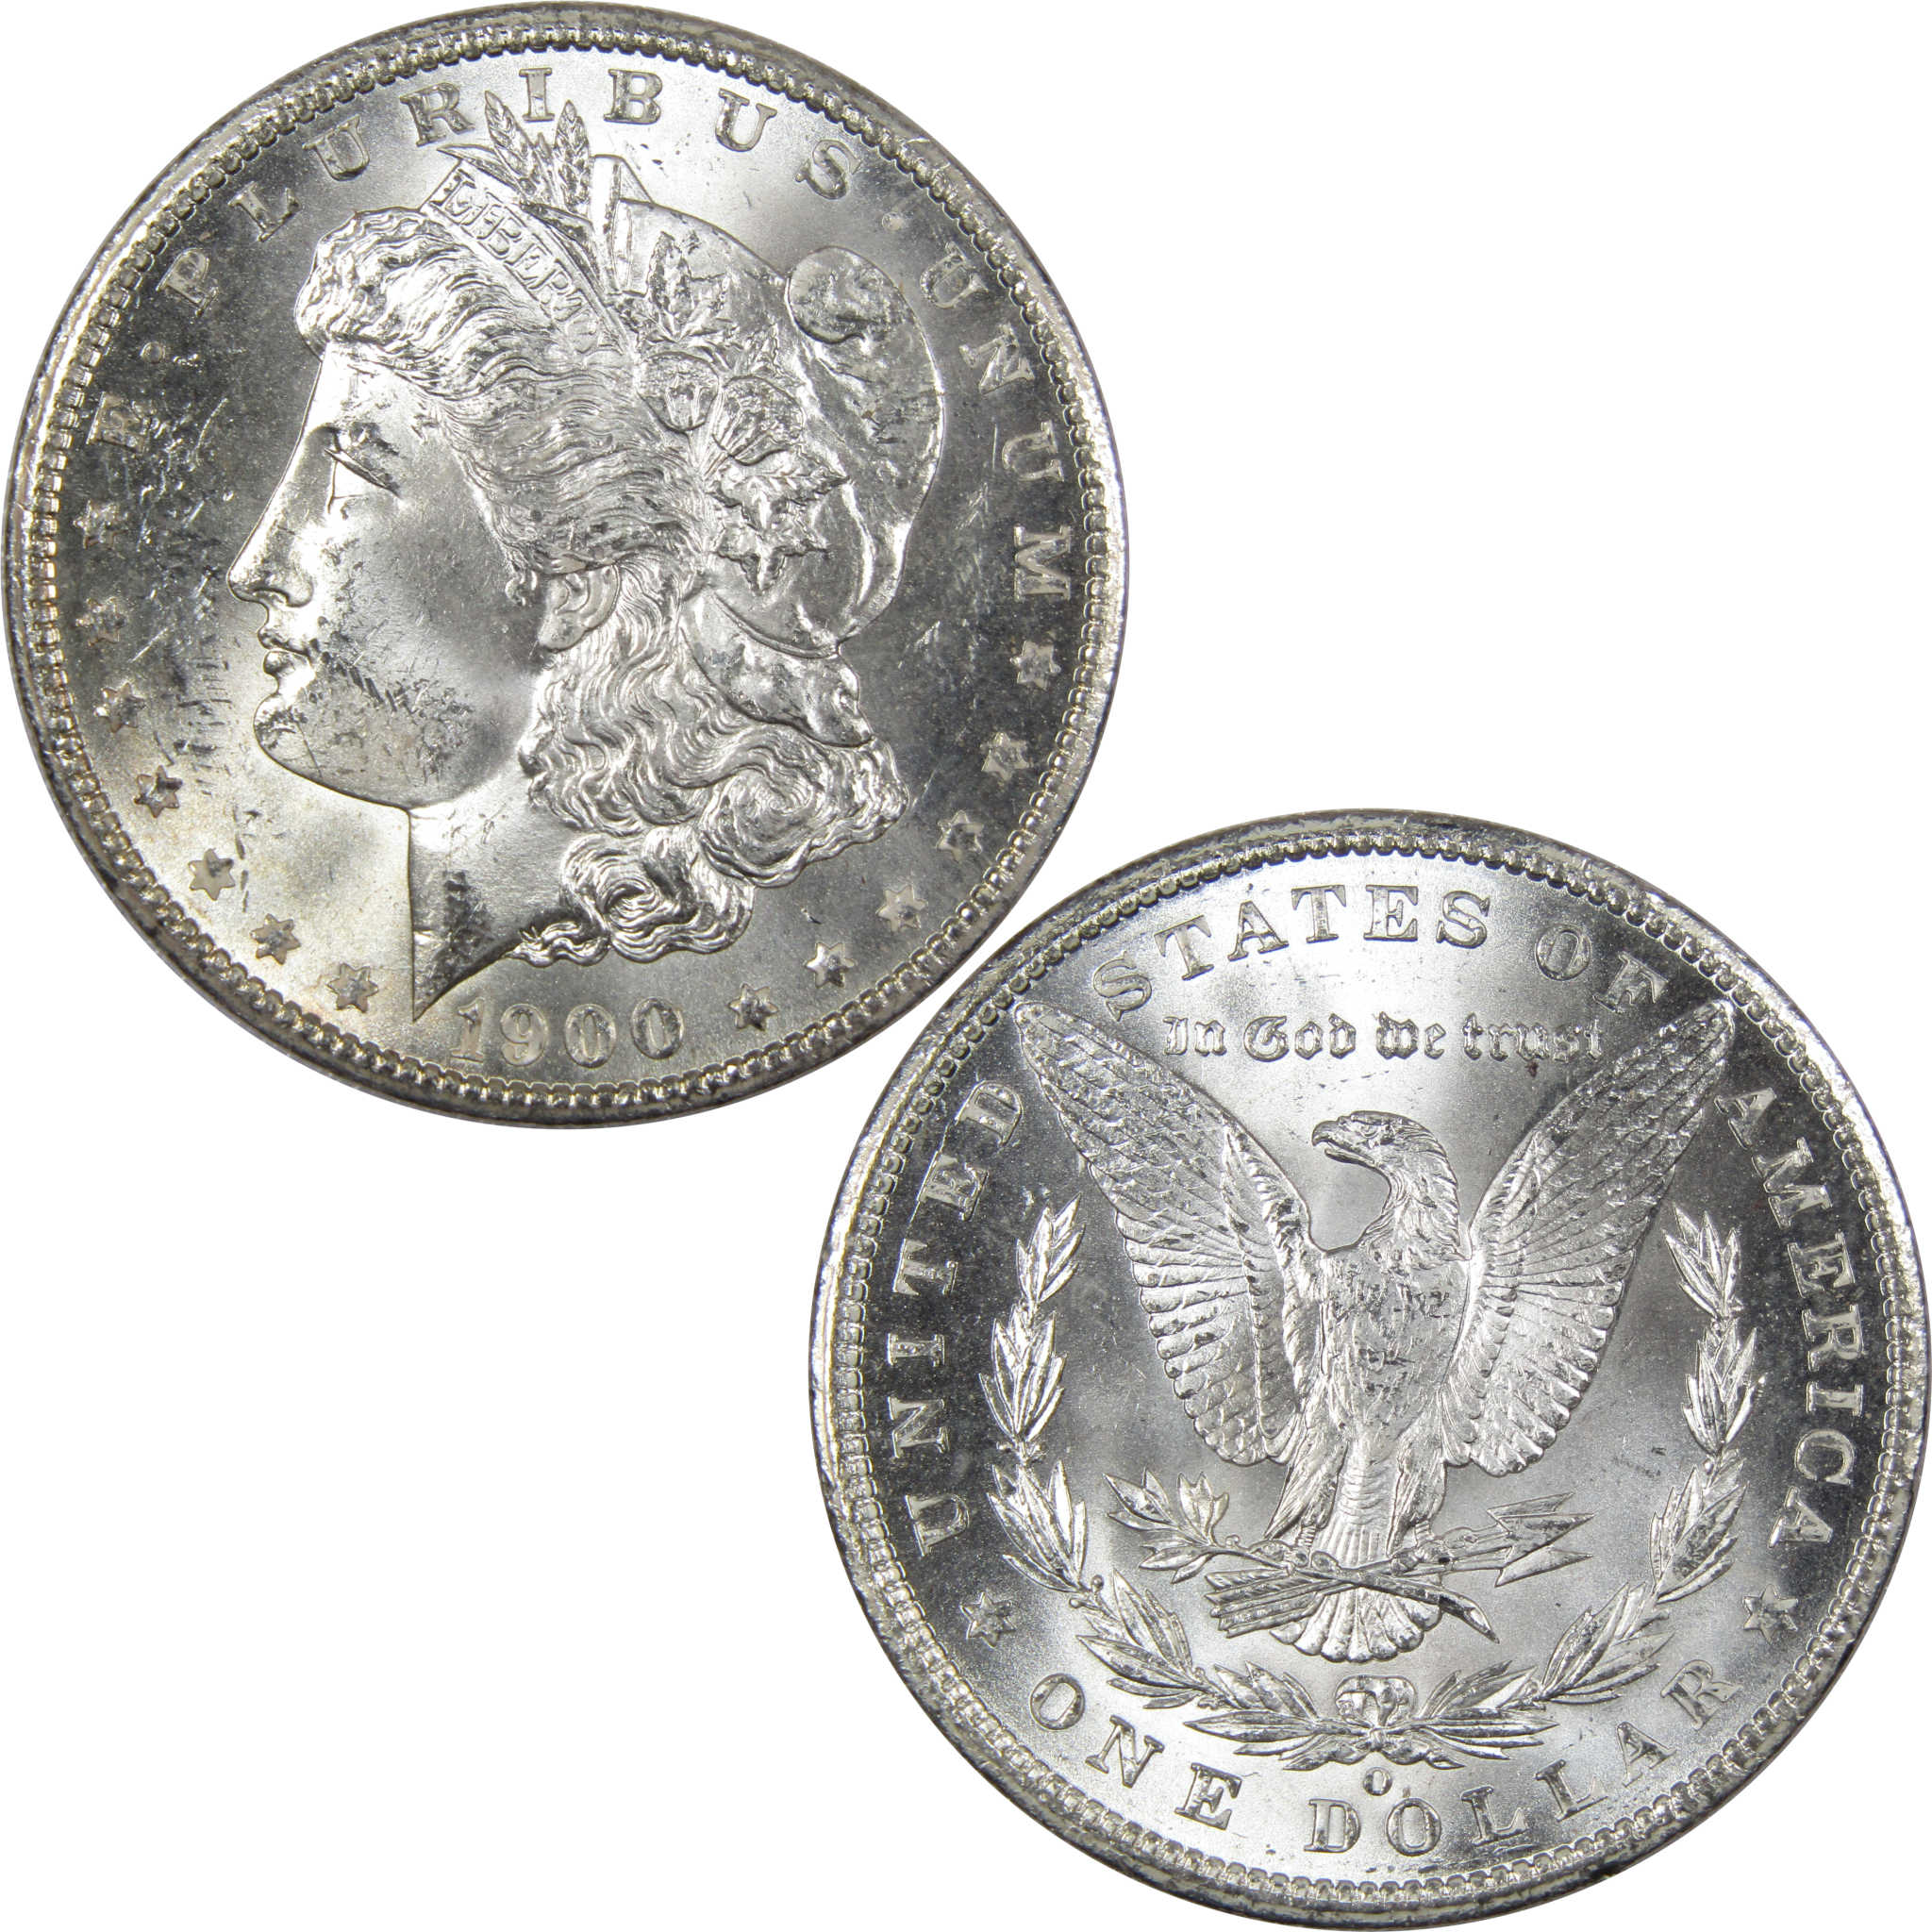 1900 O Morgan Dollar BU Uncirculated Mint State 90% Silver SKU:IPC9777 - Morgan coin - Morgan silver dollar - Morgan silver dollar for sale - Profile Coins &amp; Collectibles